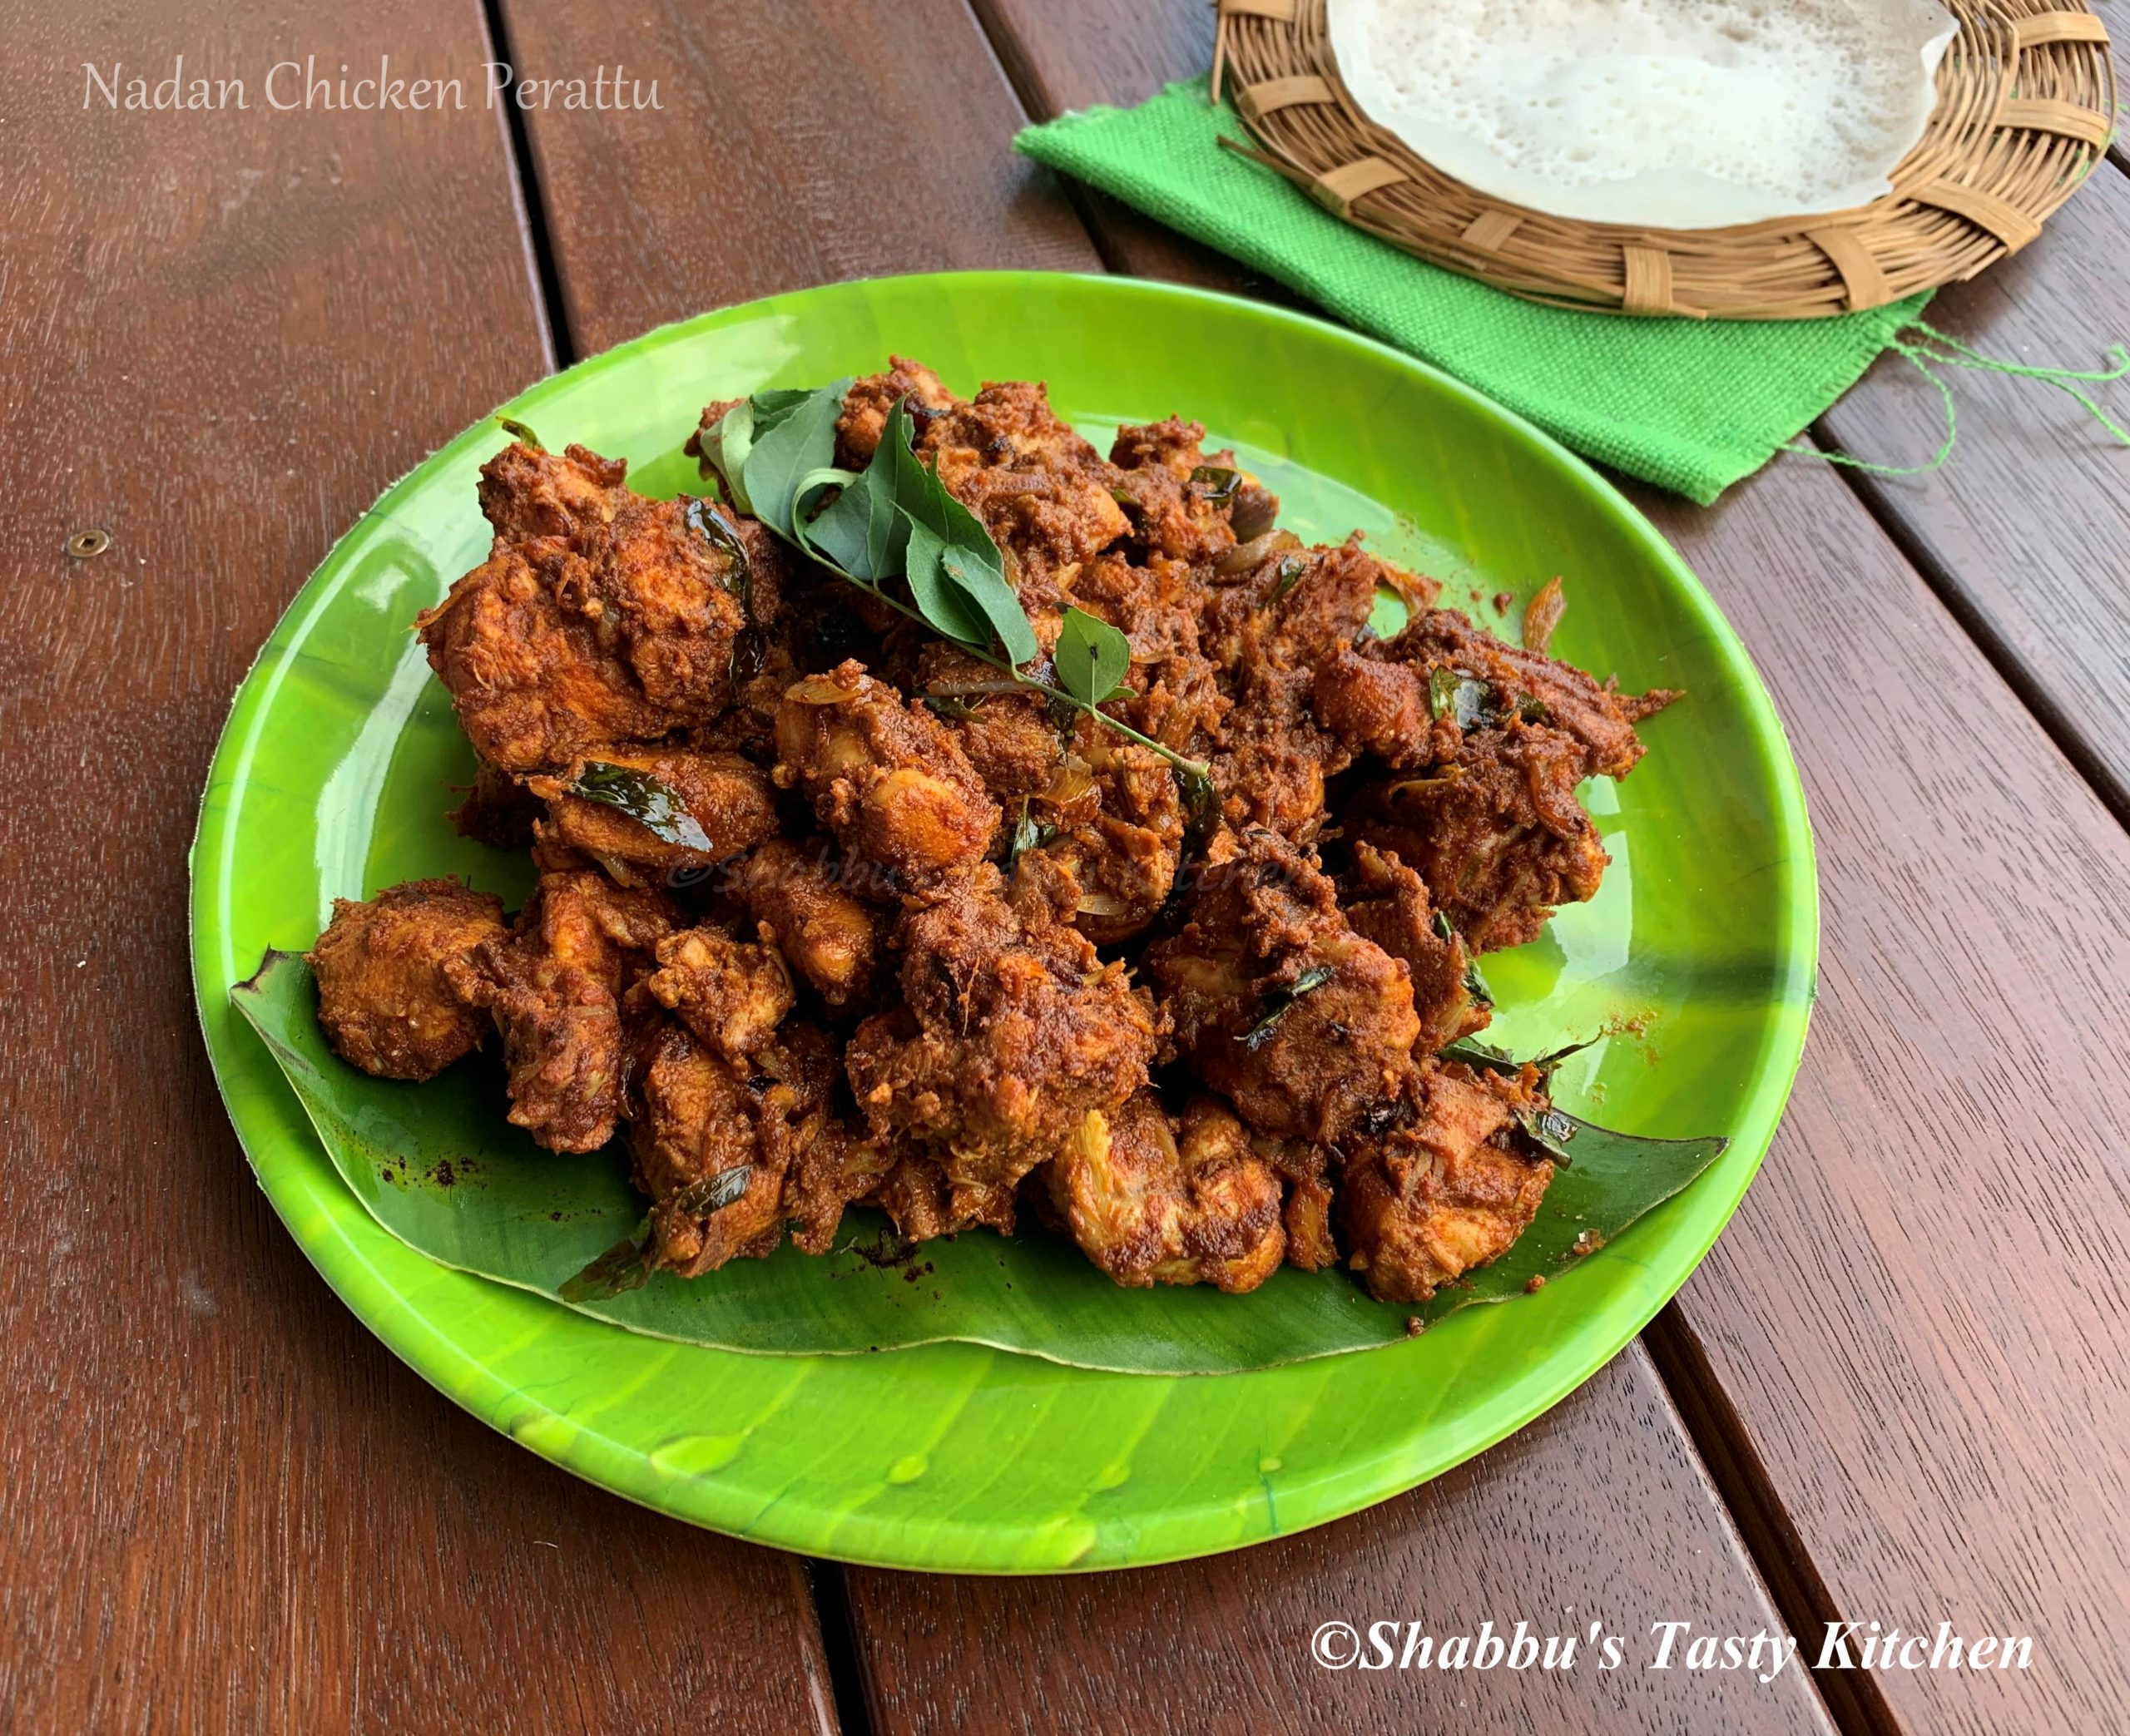 Nadan Chicken Perattu - Shabbu's Tasty Kitchen